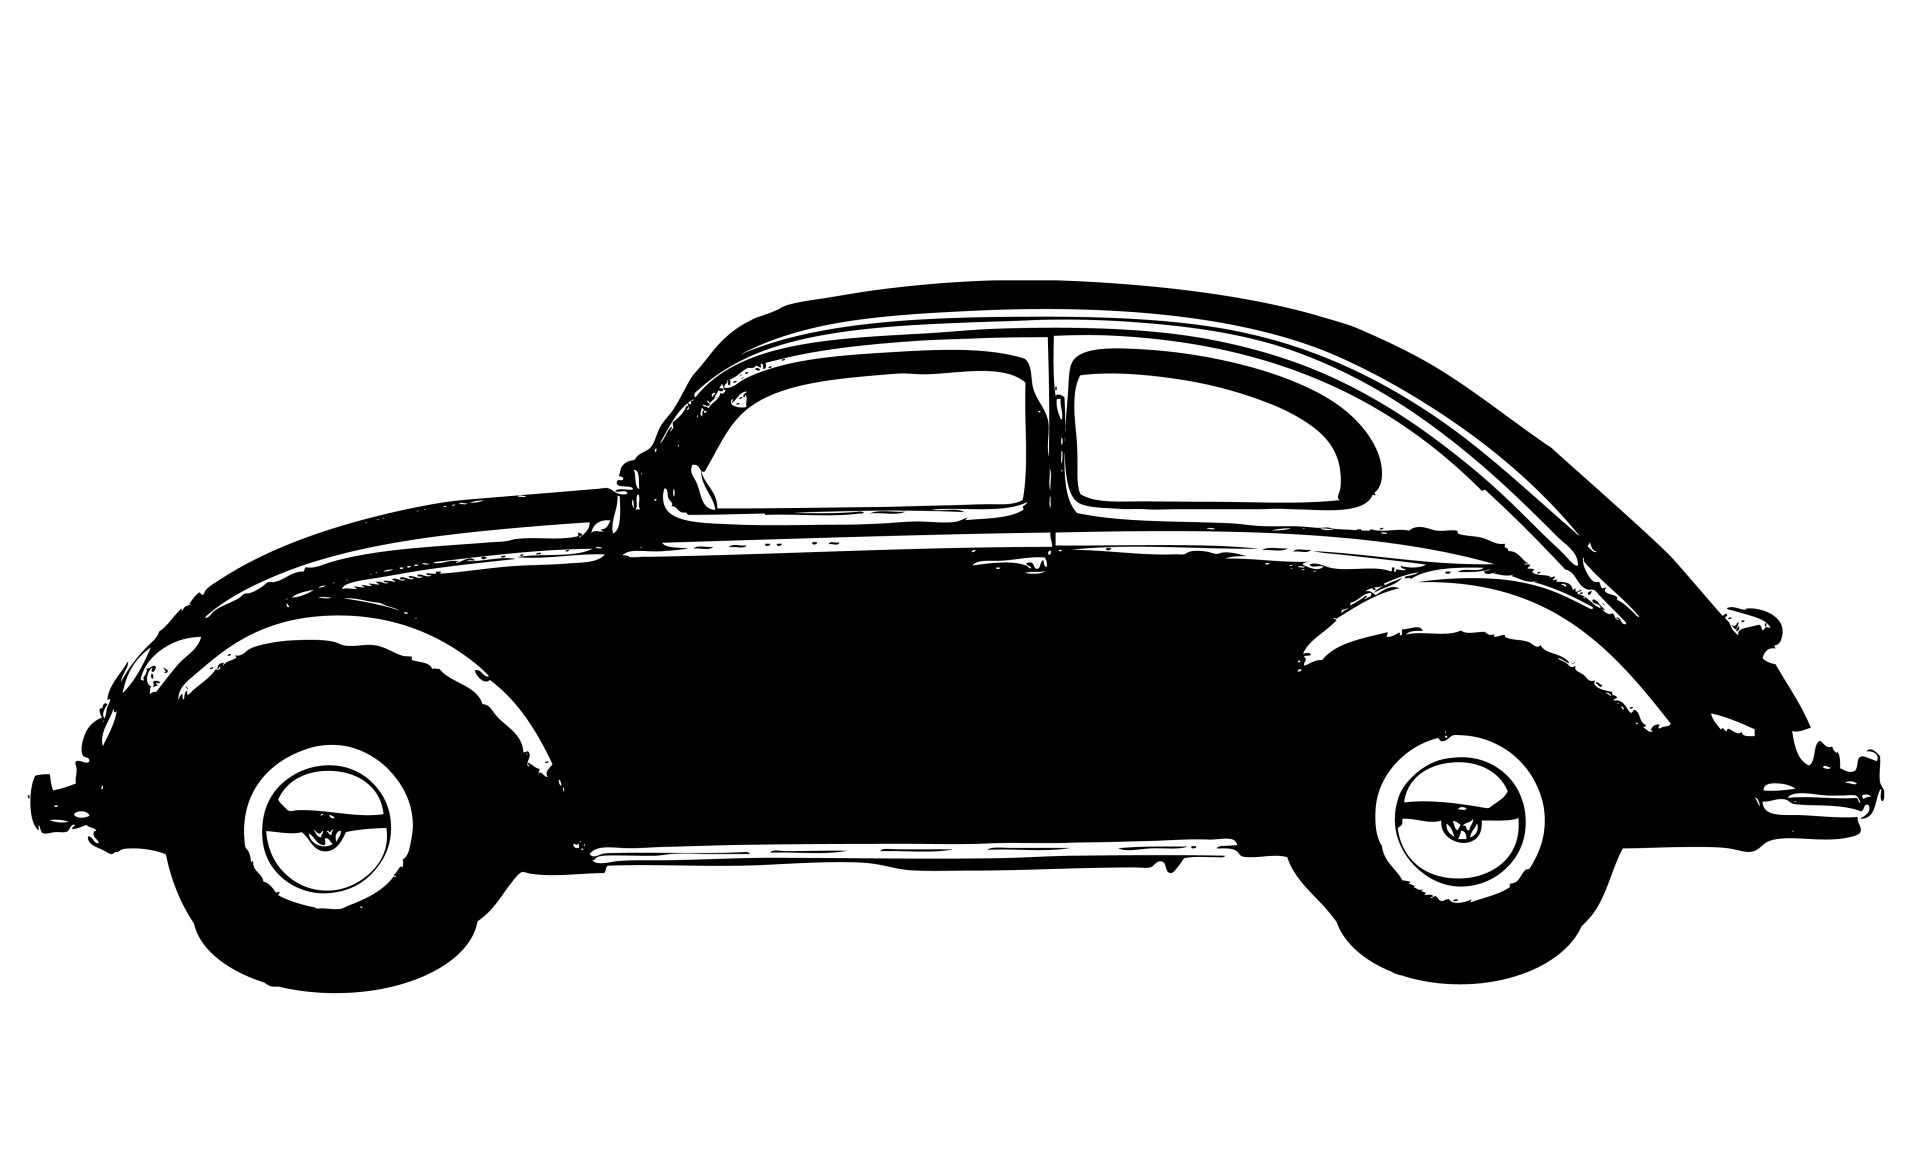 ... Vintage Car Clipart - clipartall ...